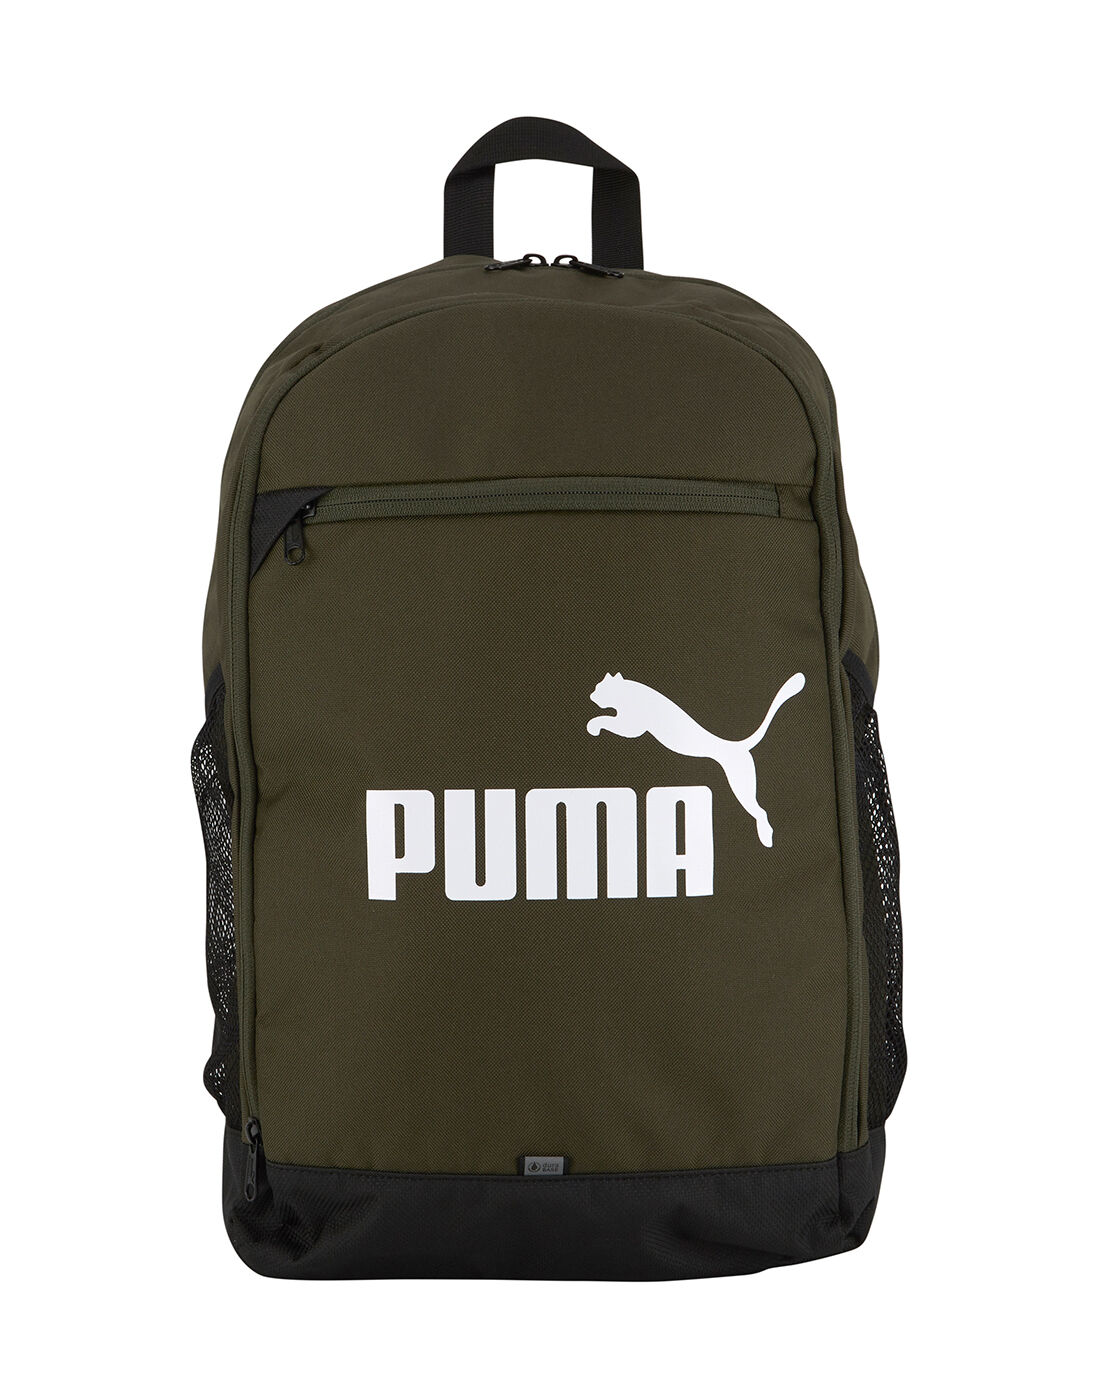 puma bags green